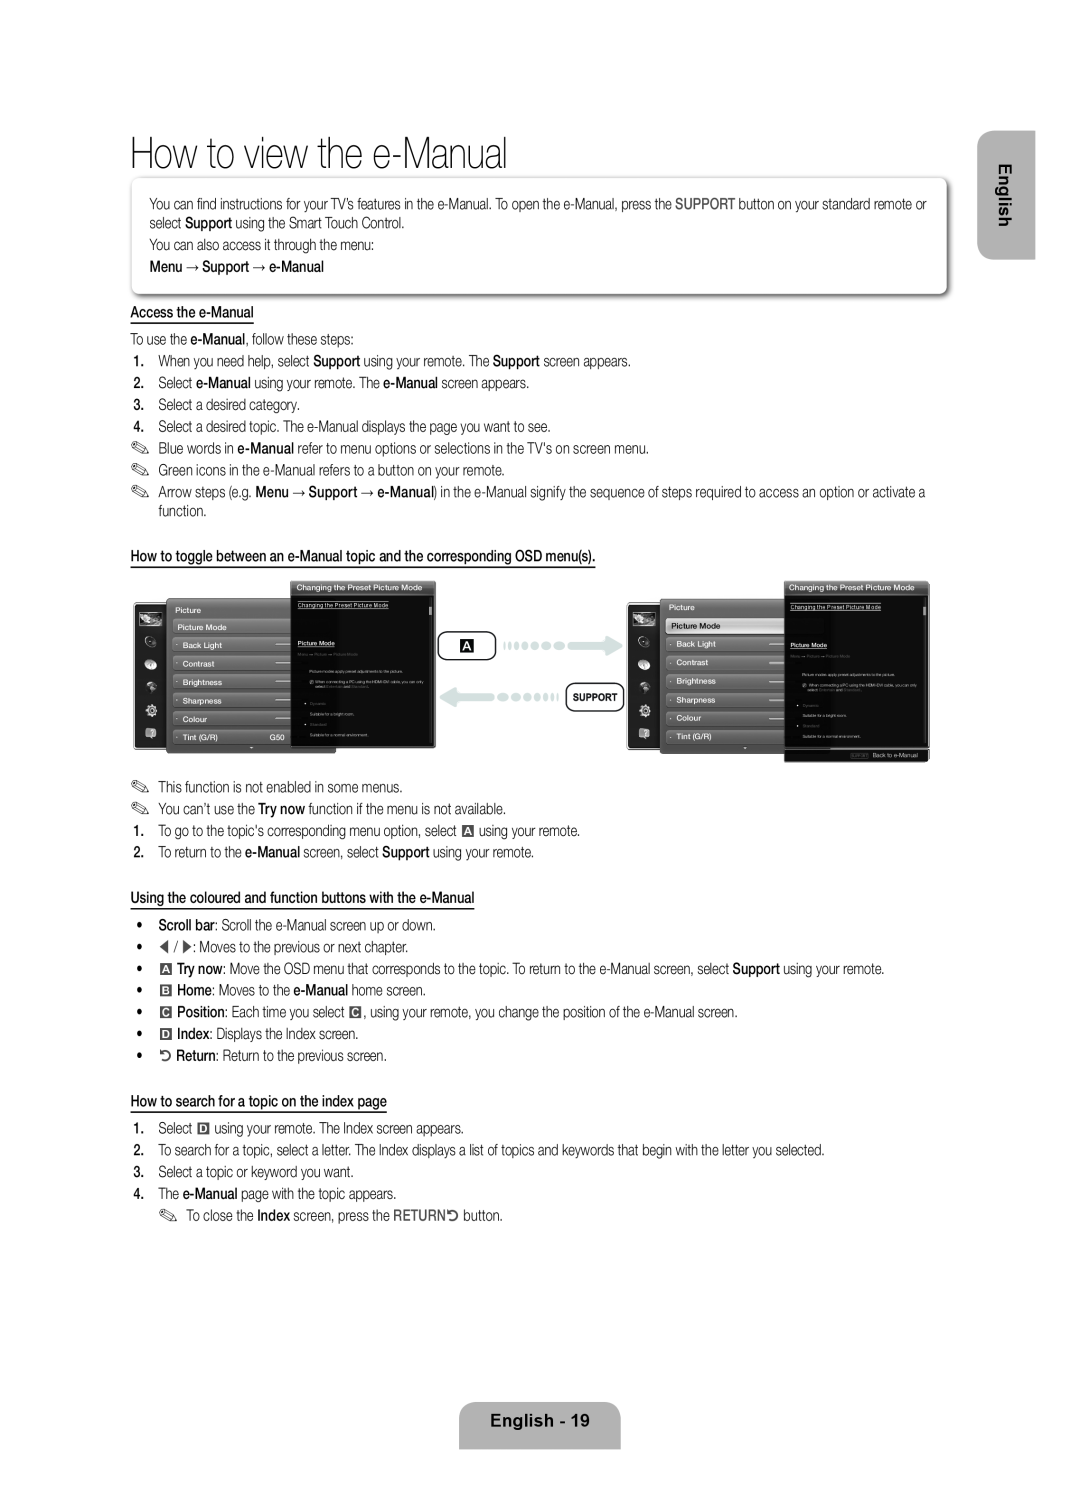 Samsung UE55ES7000SXXH, UE46D7090LSXZG, UE46ES7000SXXC, UE40D7090LSXZG, UE40ES7000SXXC manual How to view the e-Manual, English 